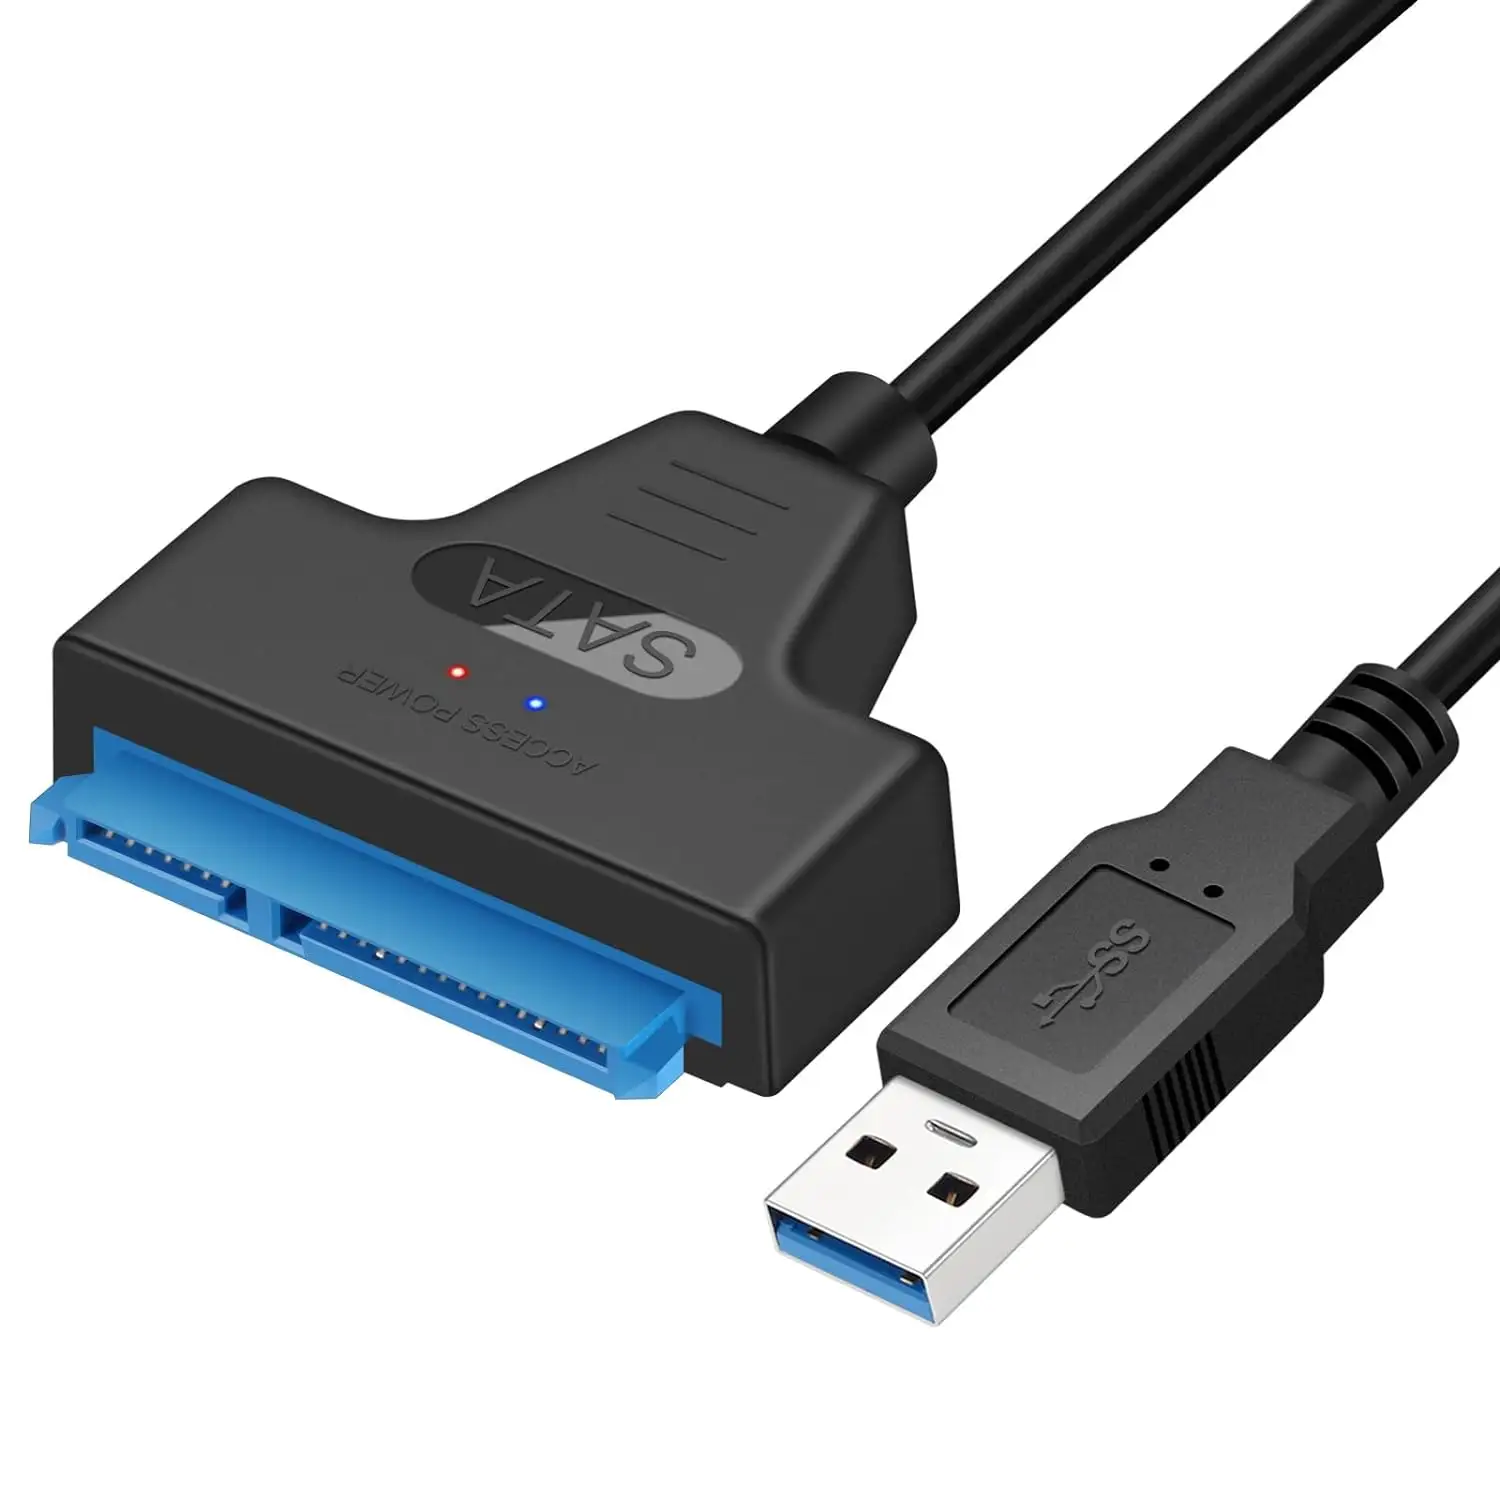 Kabel adaptor SATA ke USB 3.0, untuk 2.5 inci, Hard Drive, HDD SSD, konverter Hard Drive eksternal